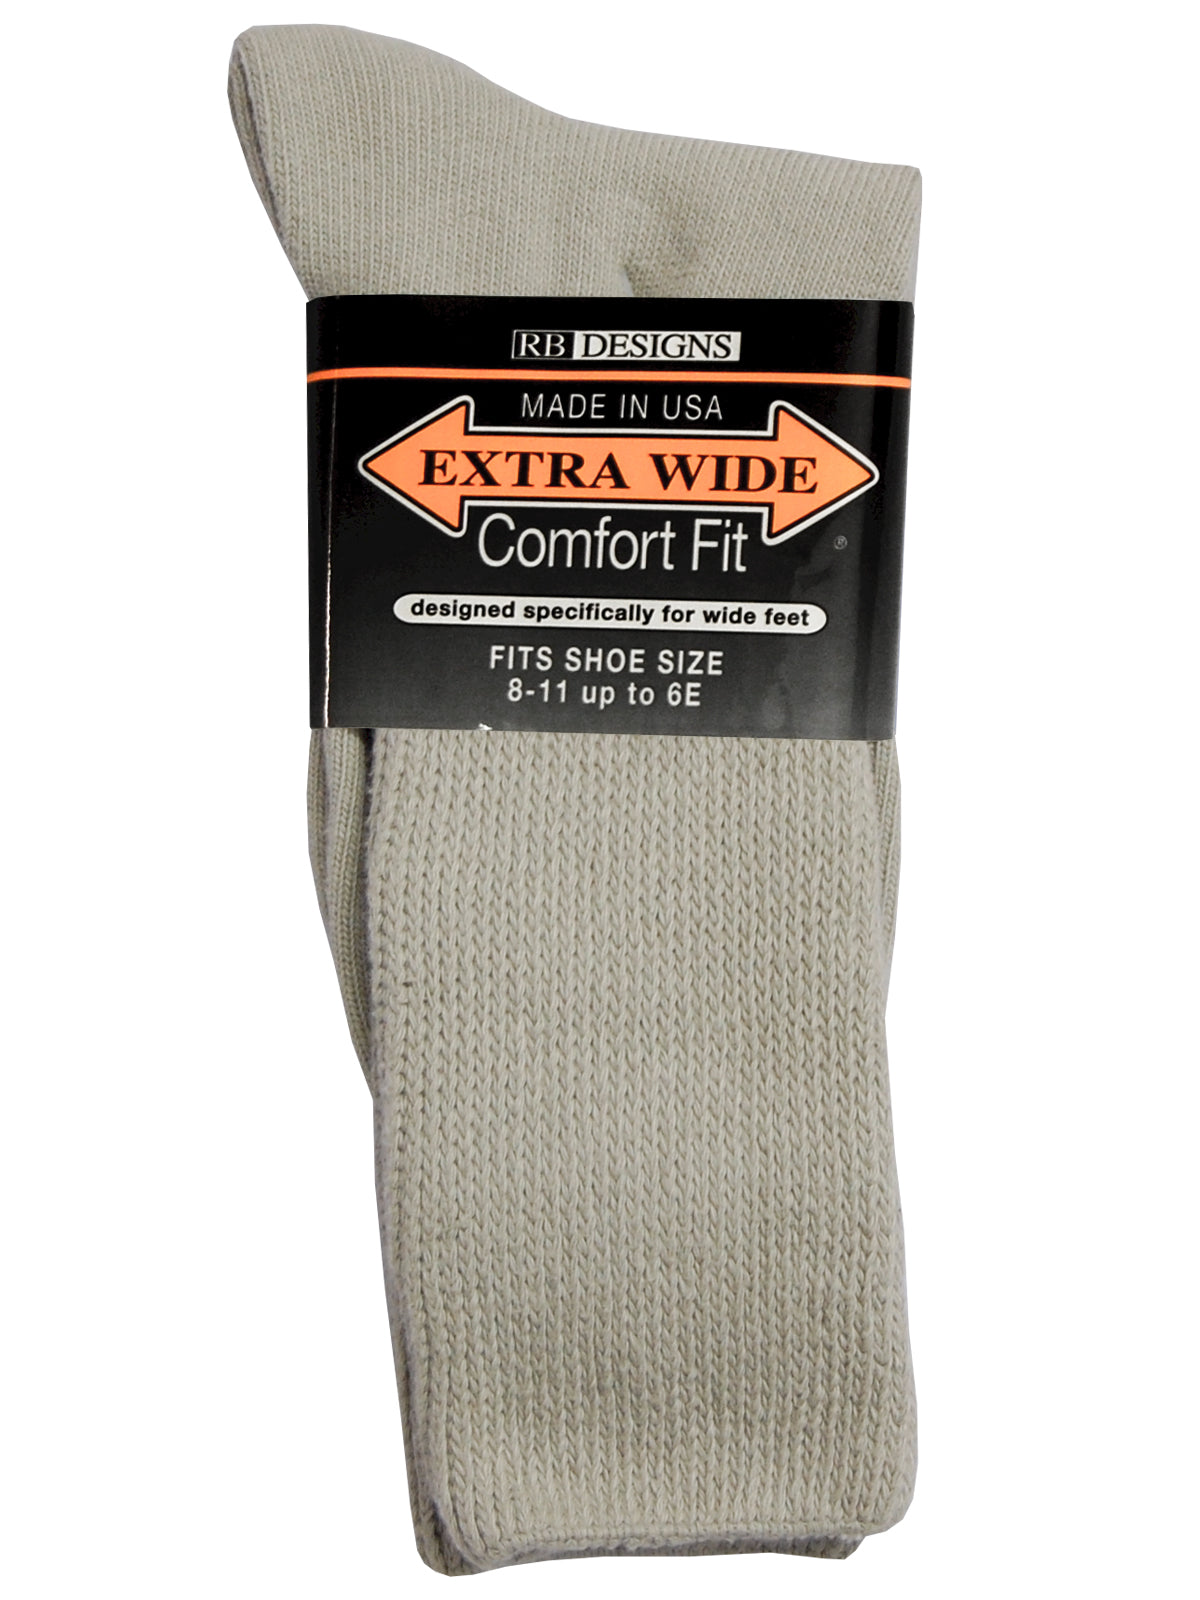 Extra Wide Men's Comfort Fit Athletic Crew Socks in Tan - Size Medium (8.5 - 11.5)